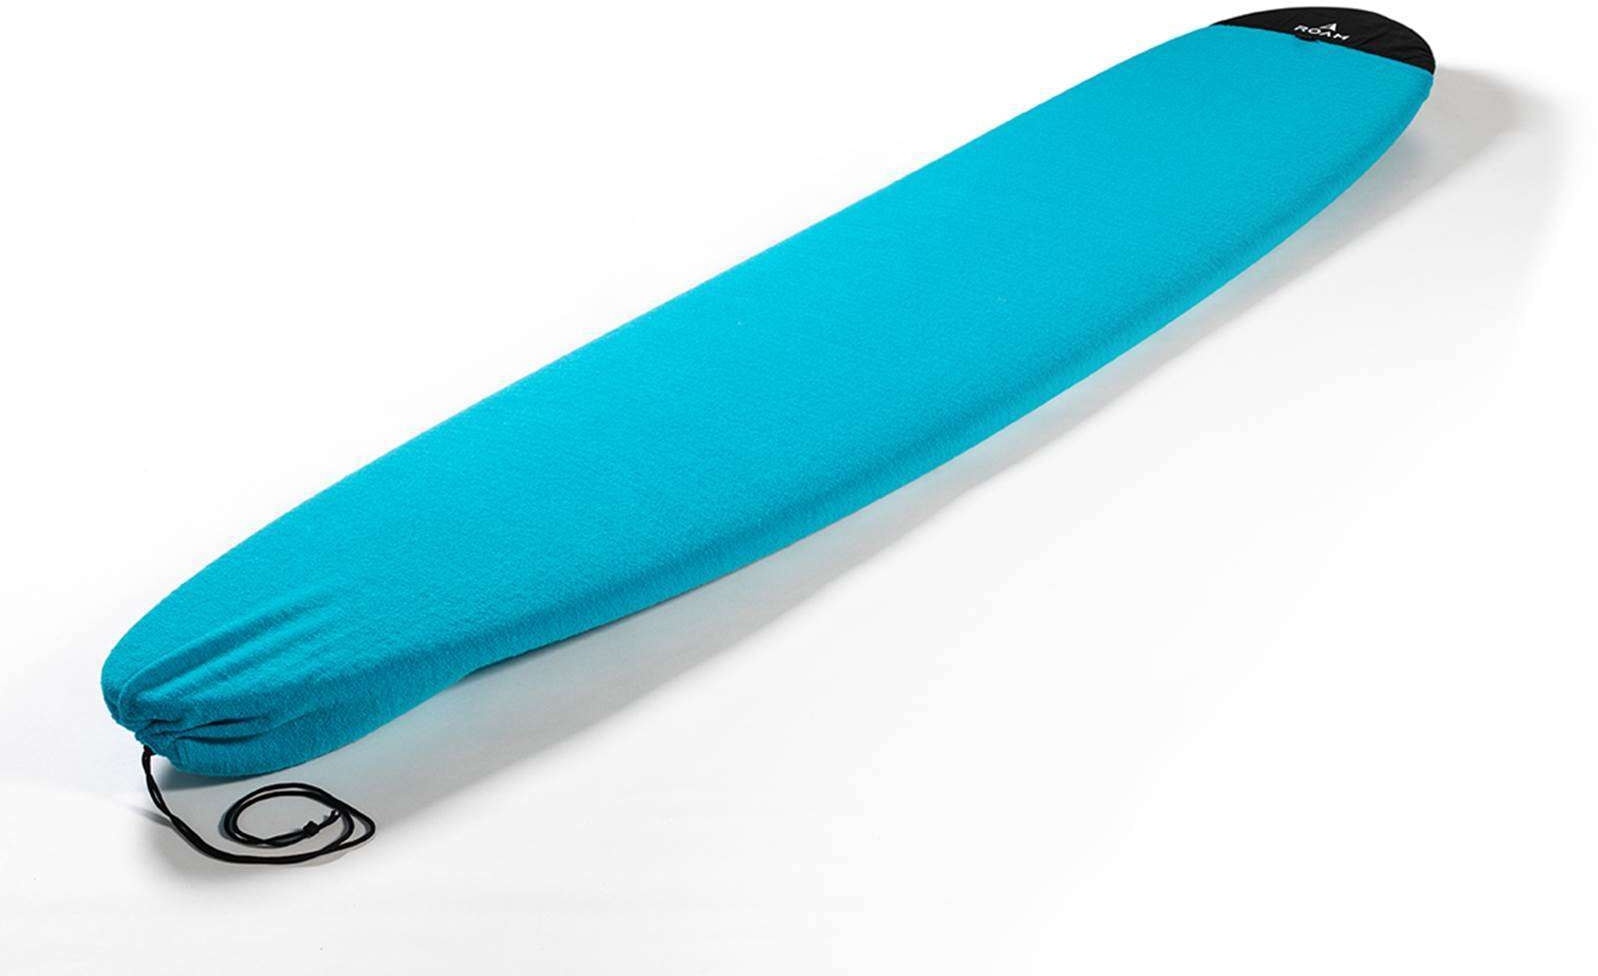 Roam Surfboard Socke Longboard Malibu Blau bag travel reise, Länge in Fuß: 8.6